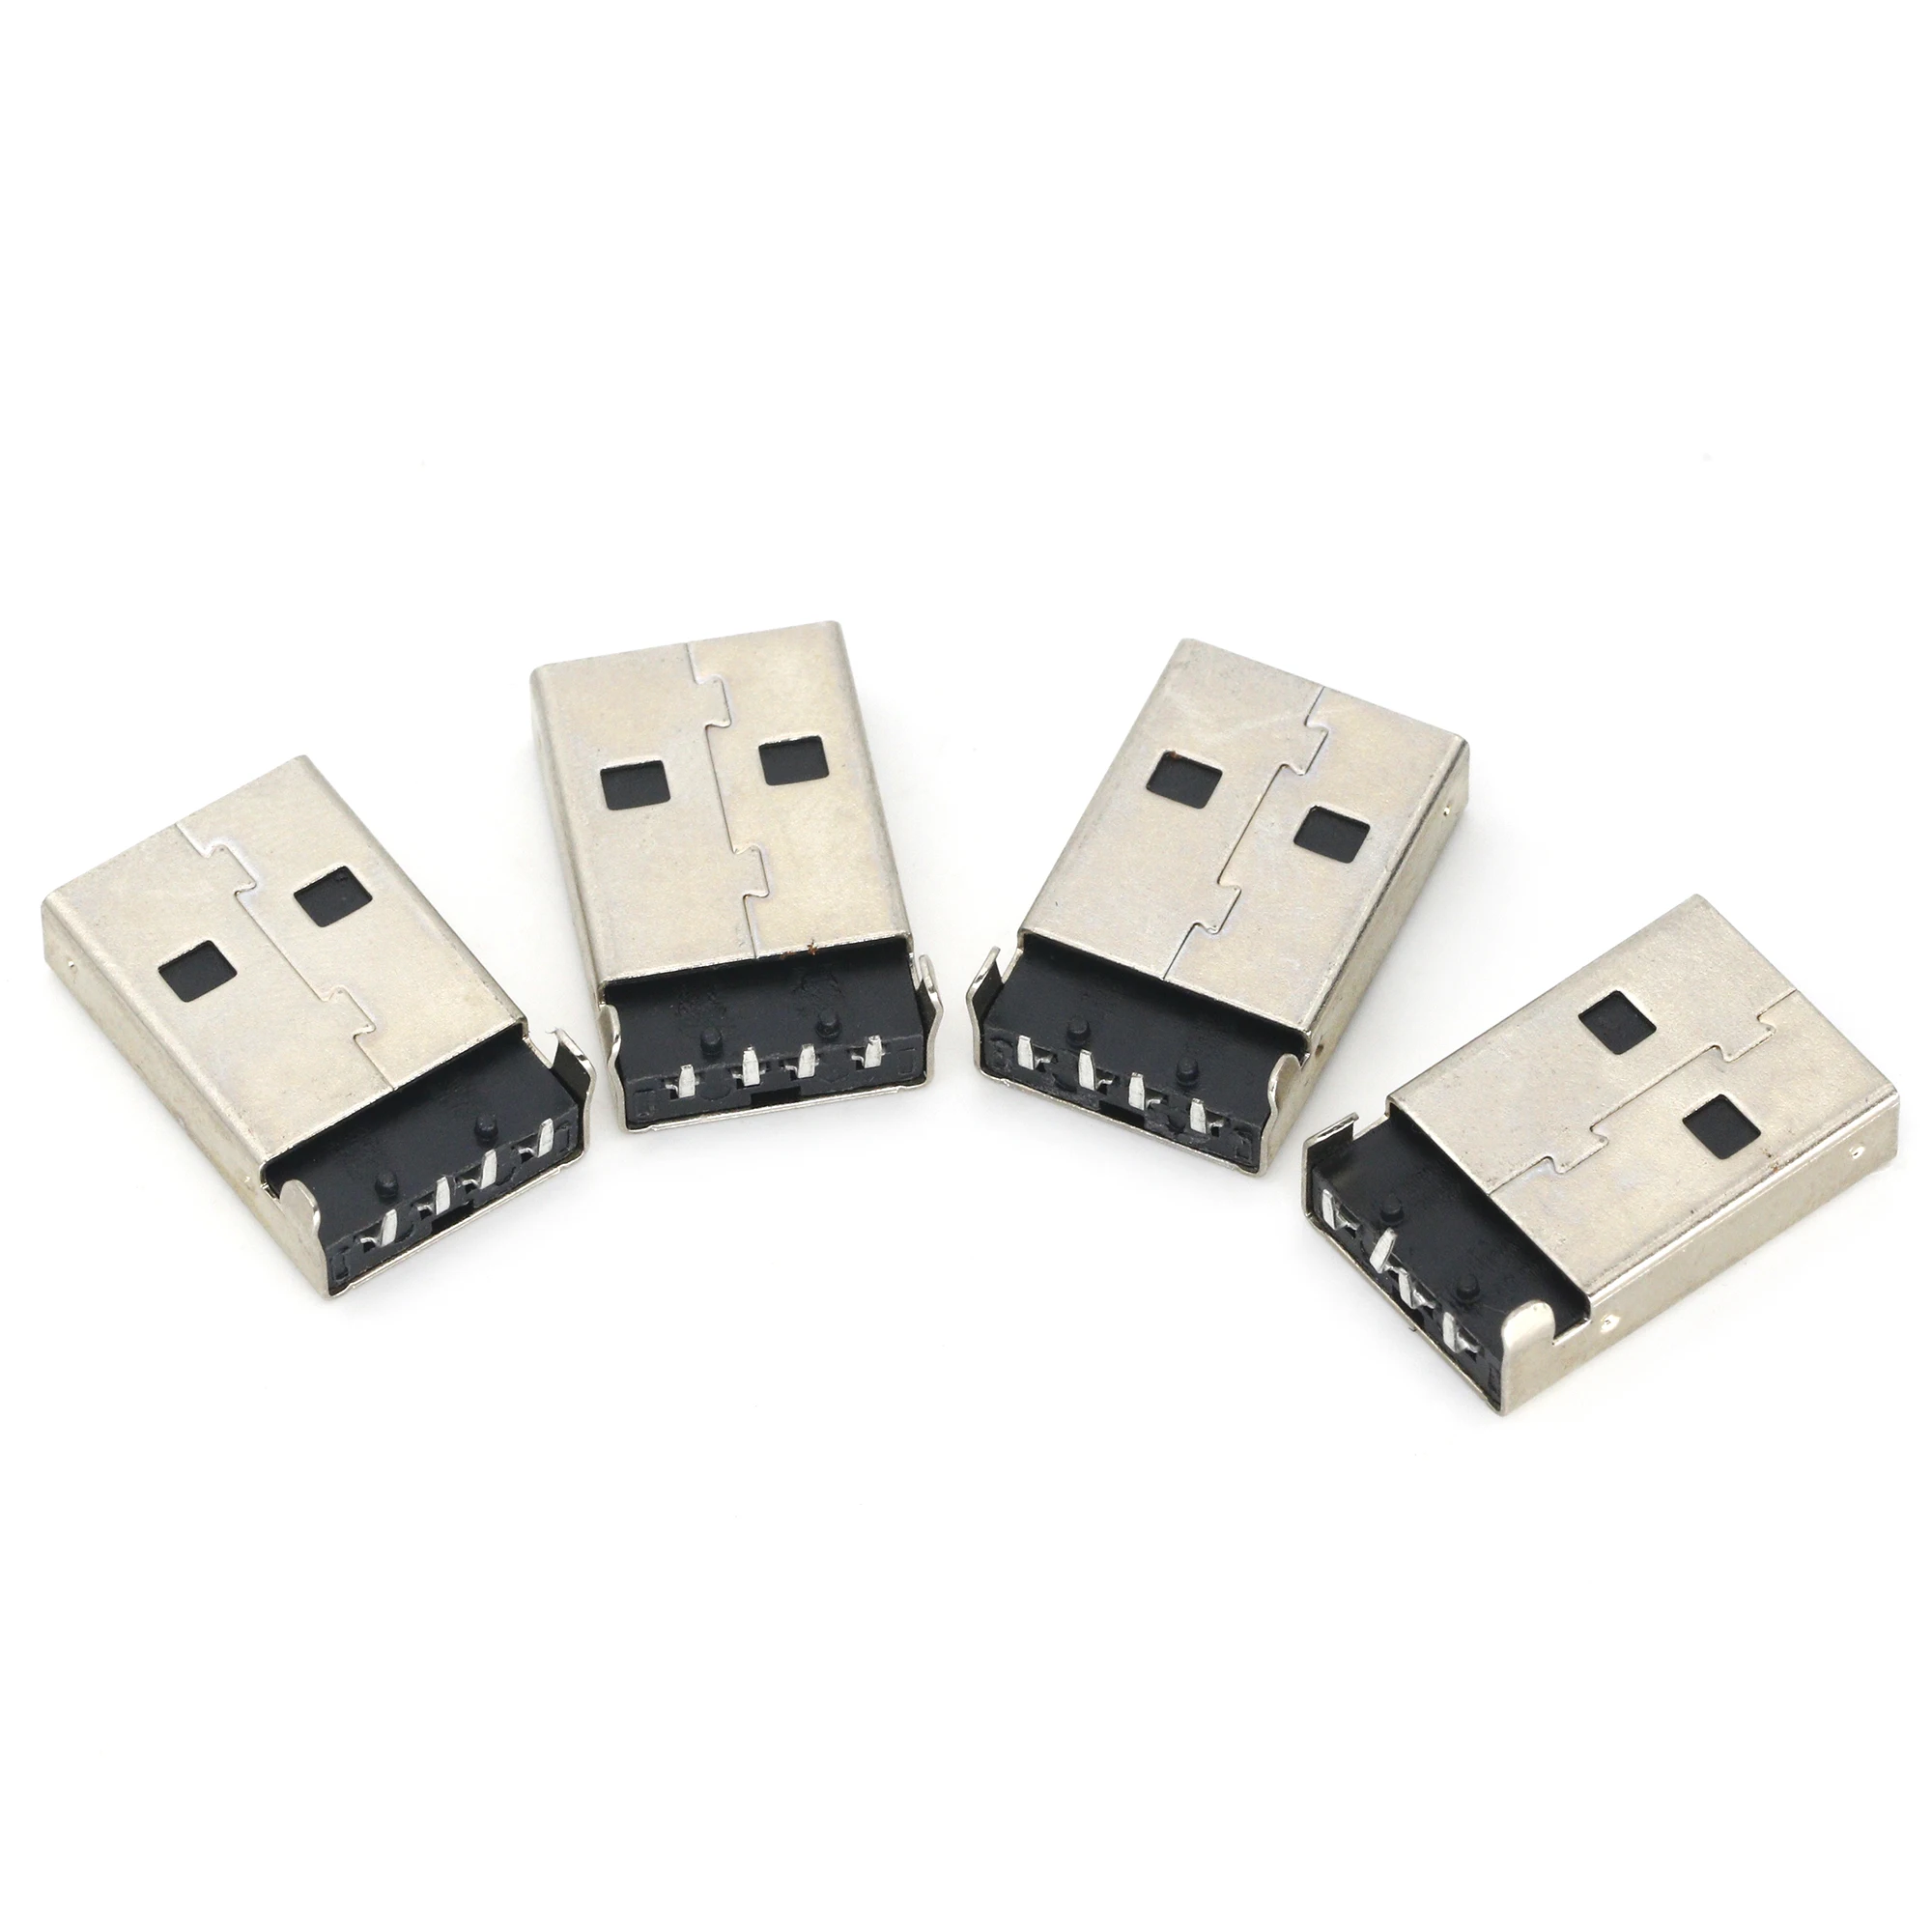 10pcs USB 2.0 Type-A Male Jack 4-Terminals PCB Socket Connector 19mm x 12mm 